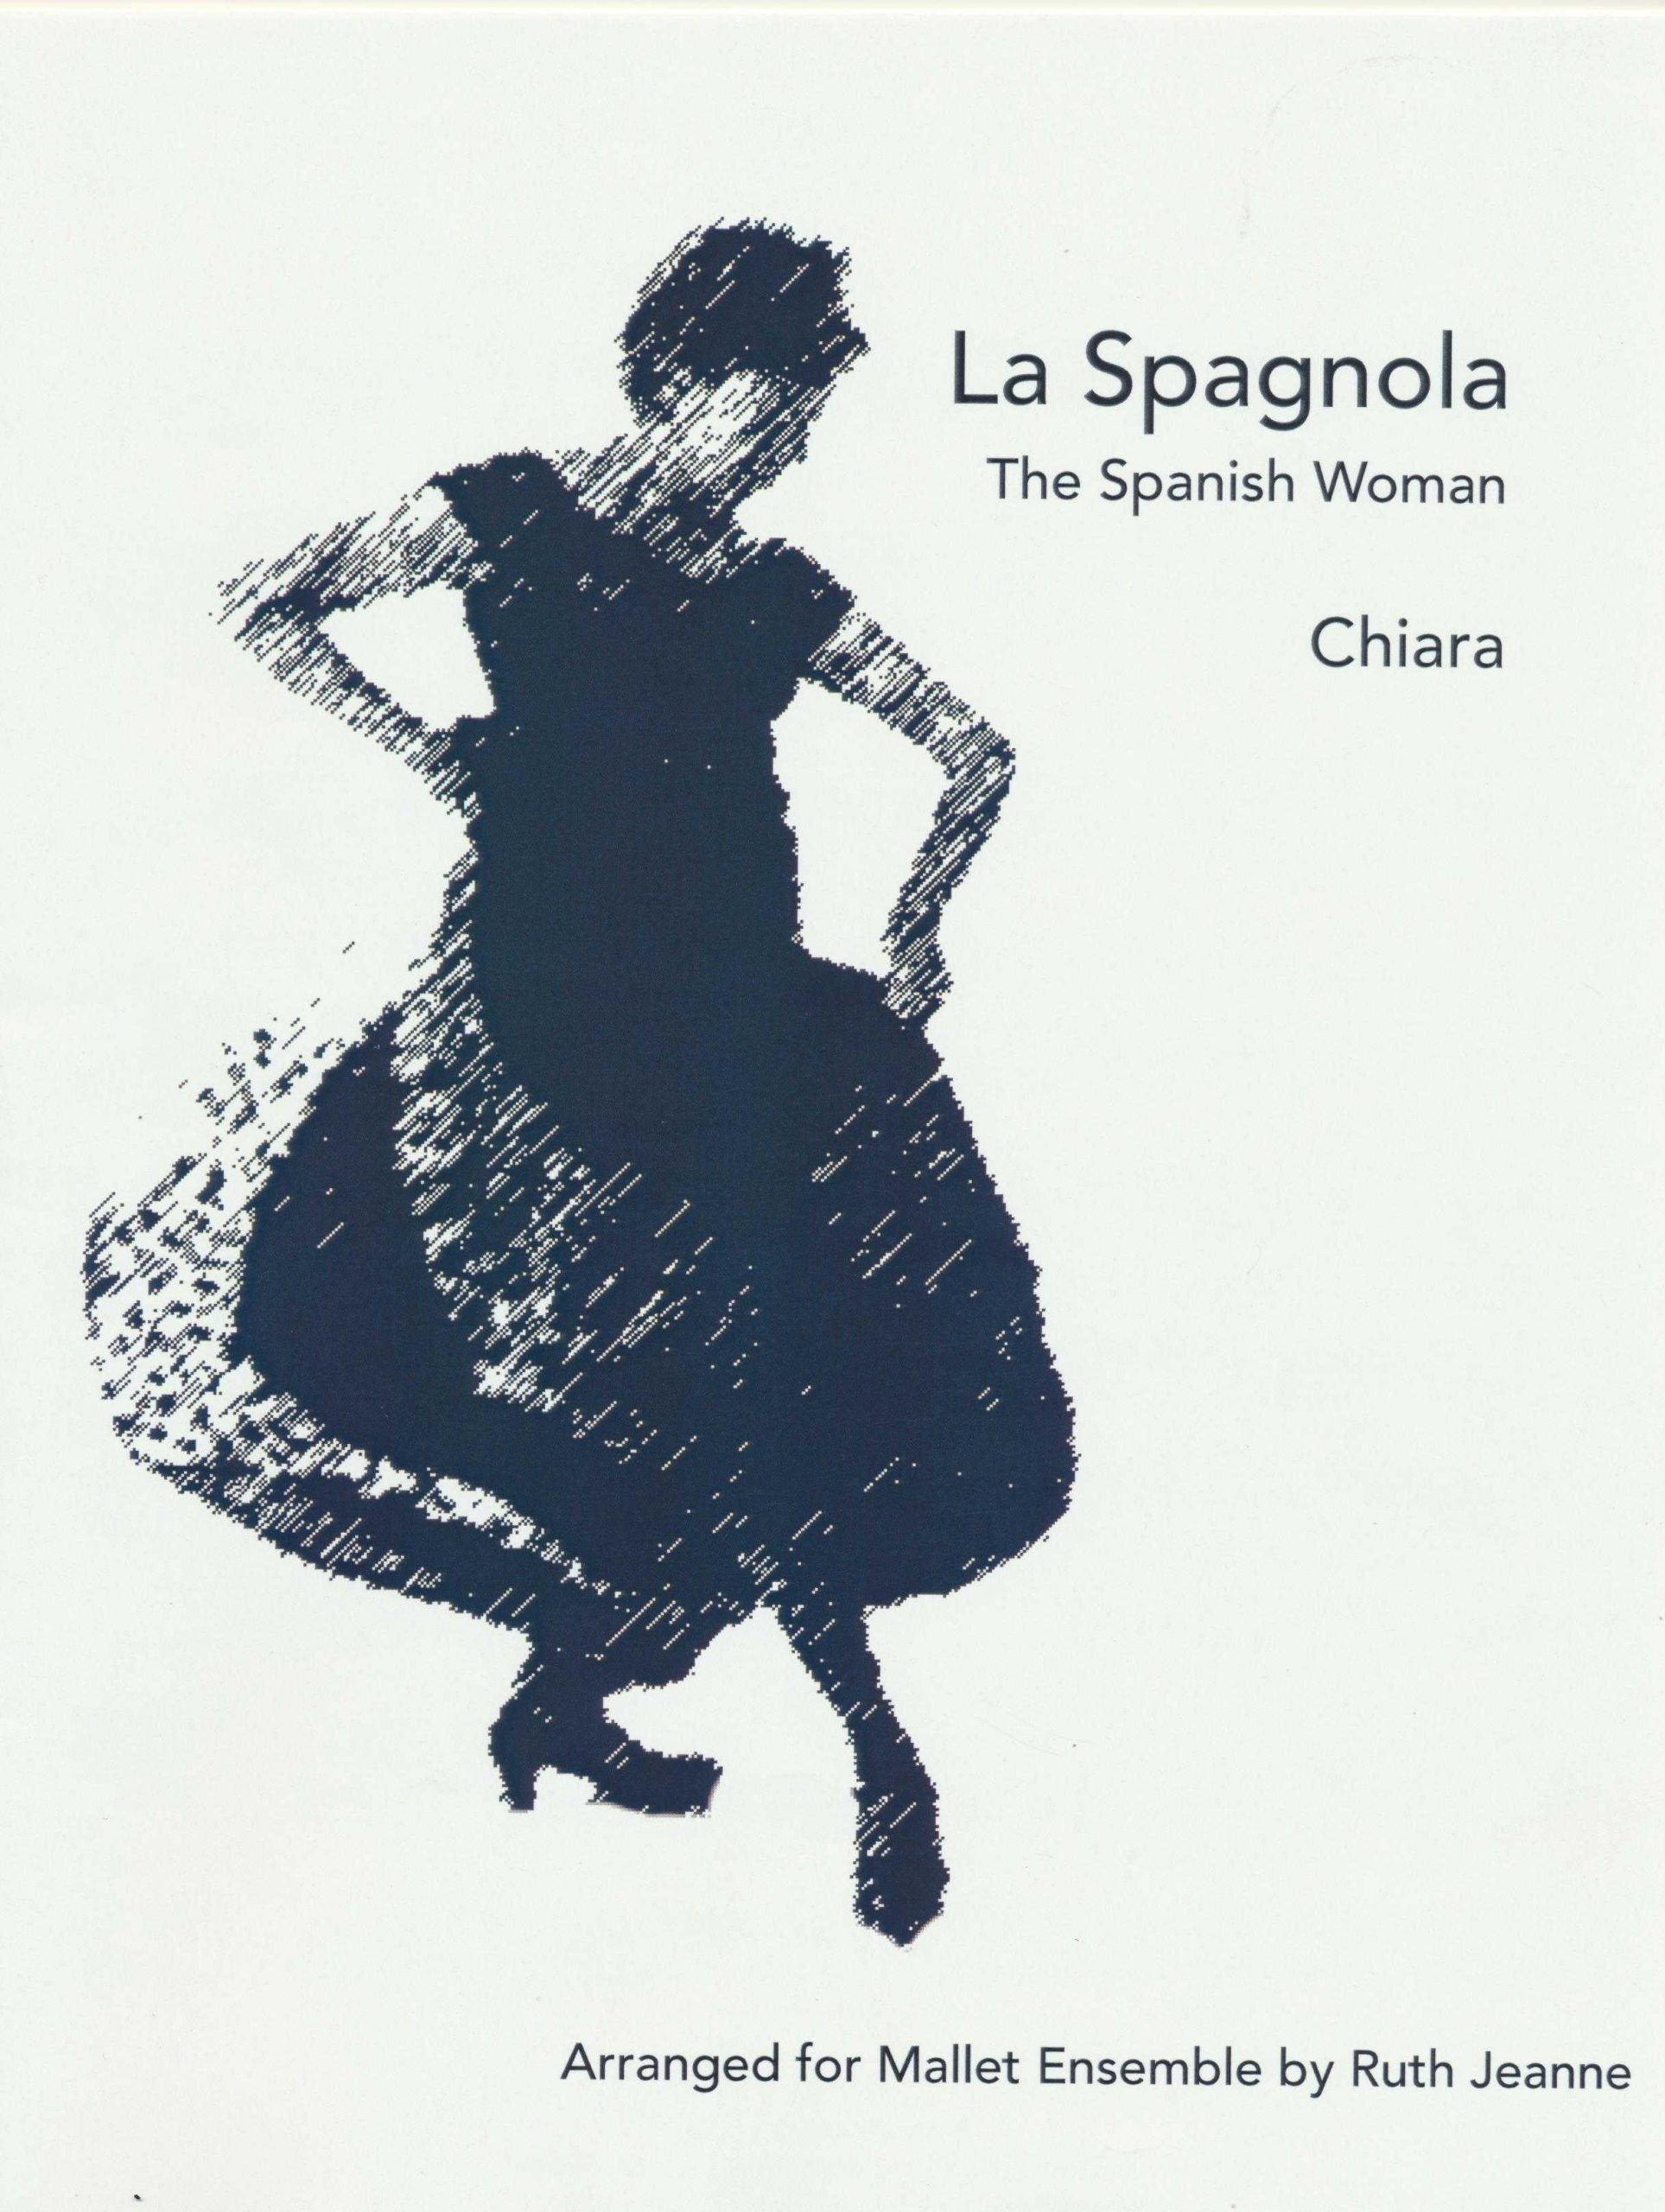 La Spagnola - The Spanish Woman by Chiara arr. Ruth Jeanne